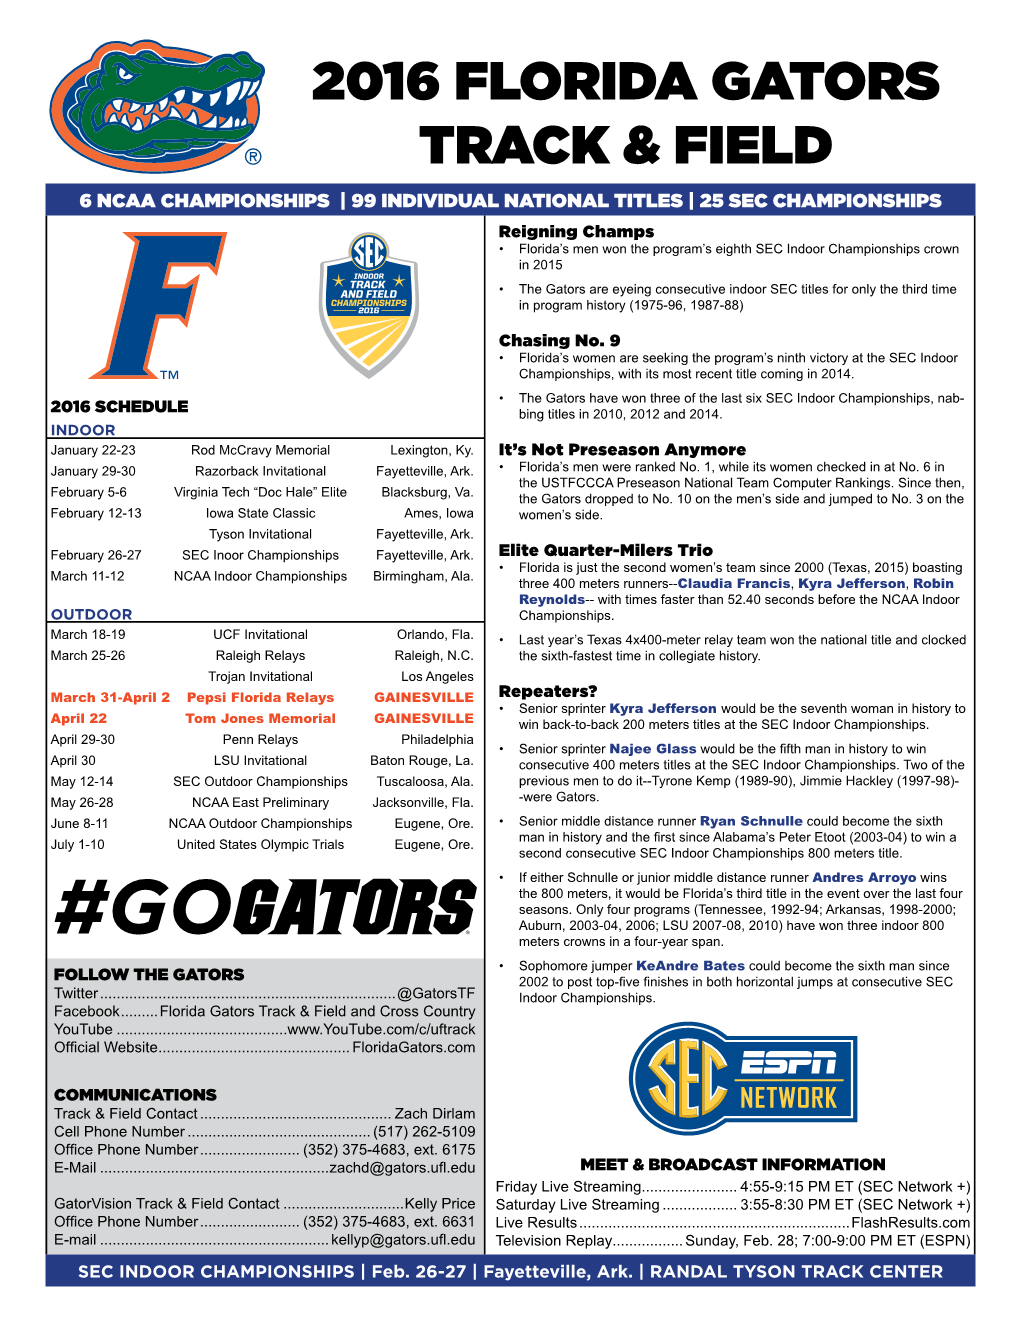 2016 Florida Gators Track & Field